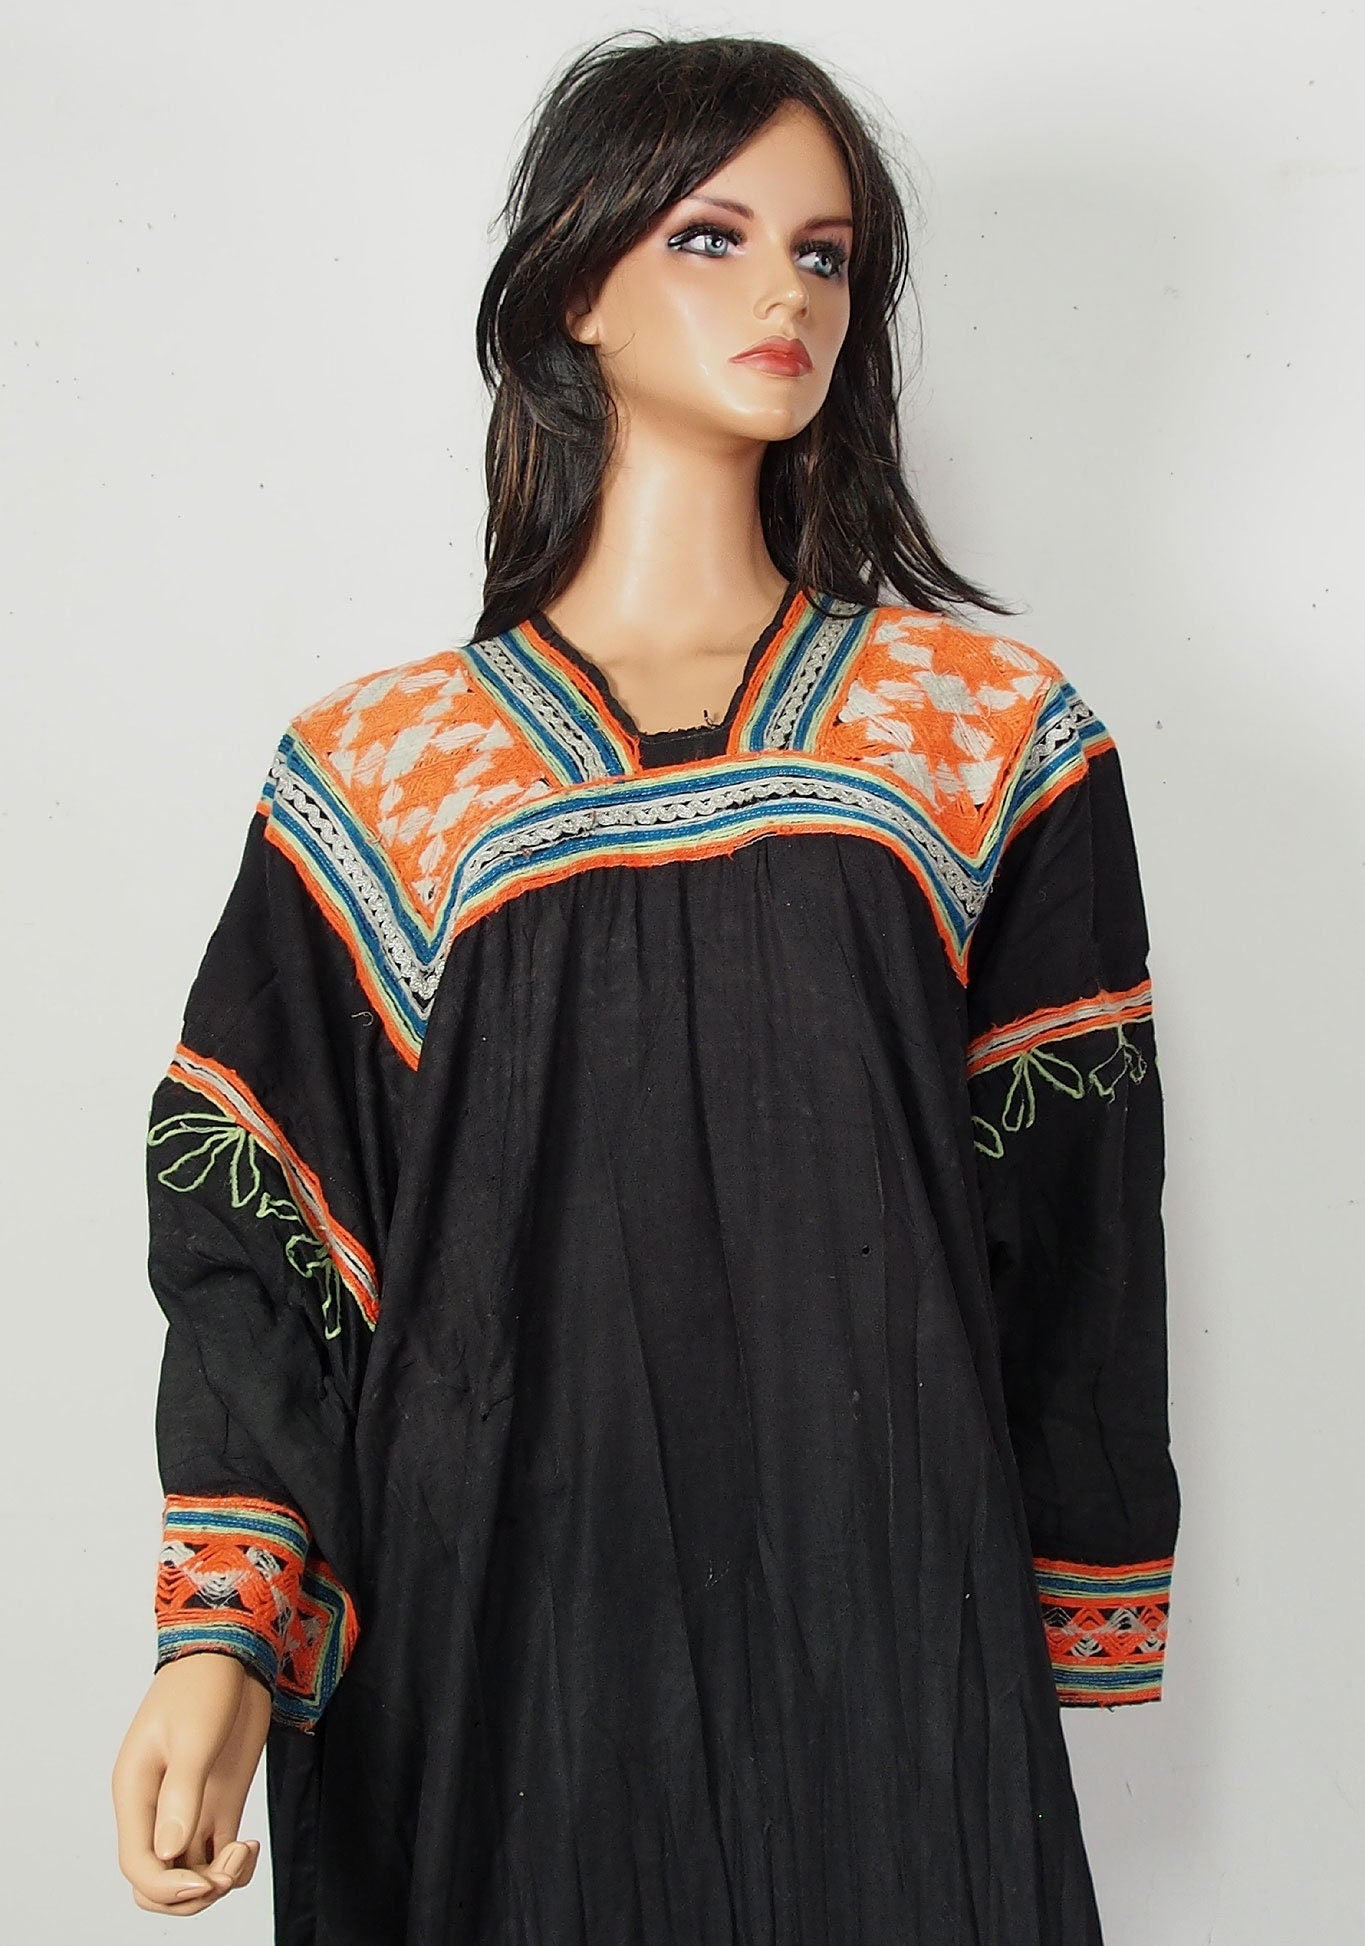 antik Frauen kleid Chitral Kalash kohistan Hindukush Pakistan Nr:4  Orientsbazar   